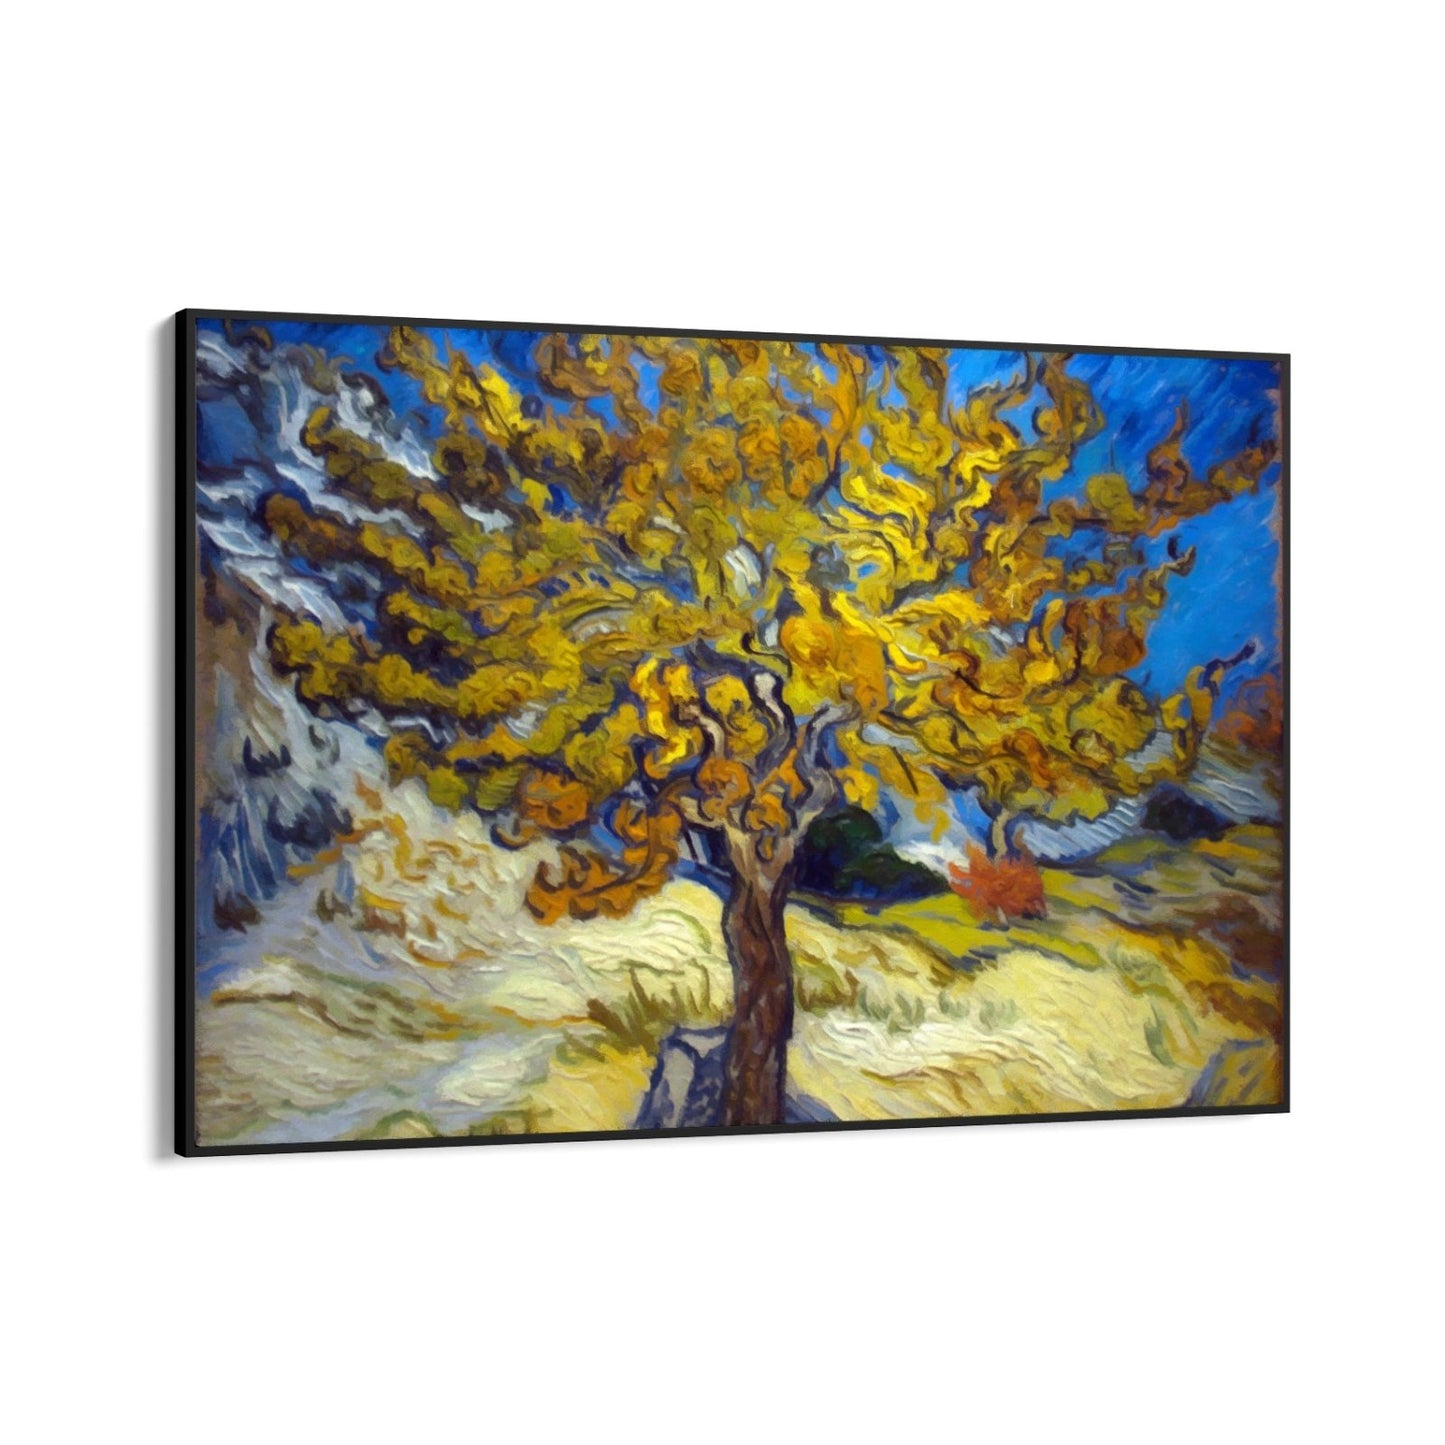 Drzewo Morwy, Vincent Van Gogh